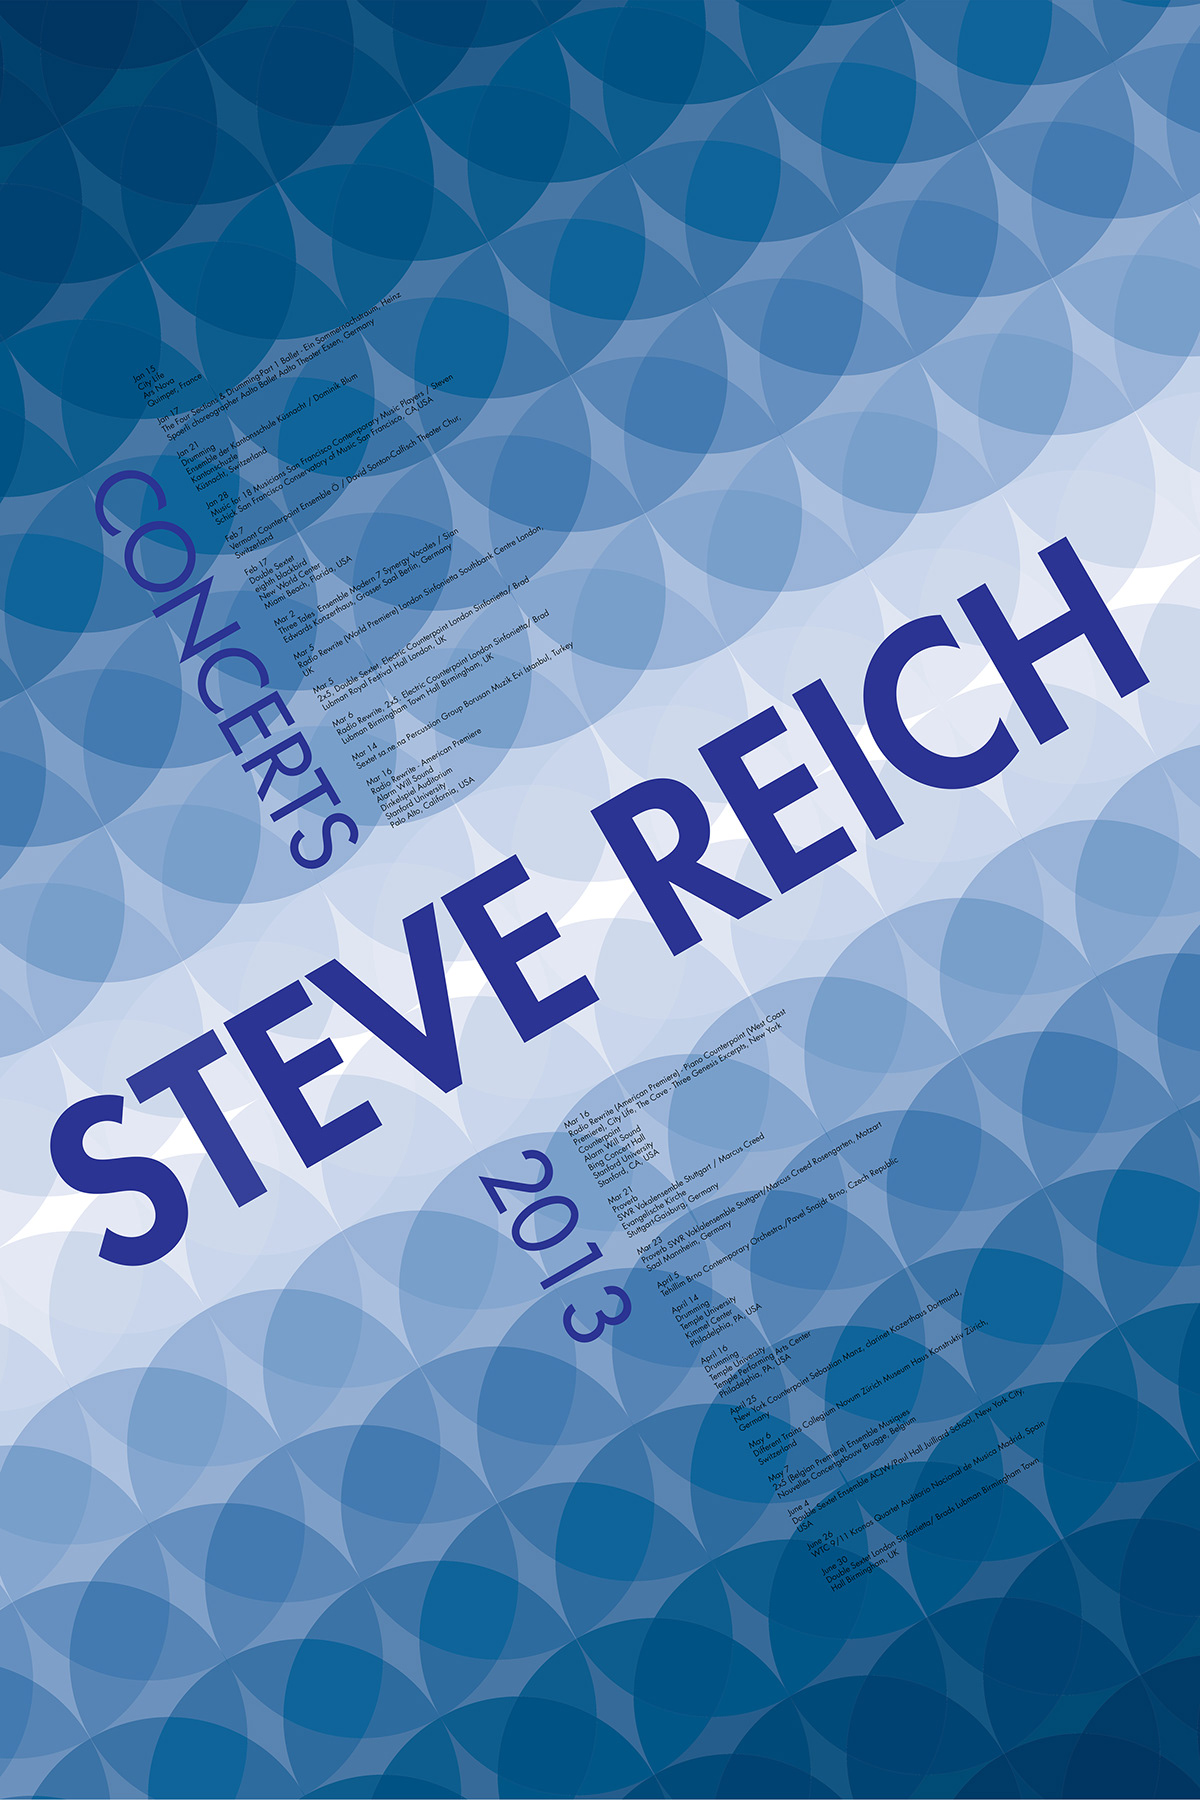 steve reich concert poster